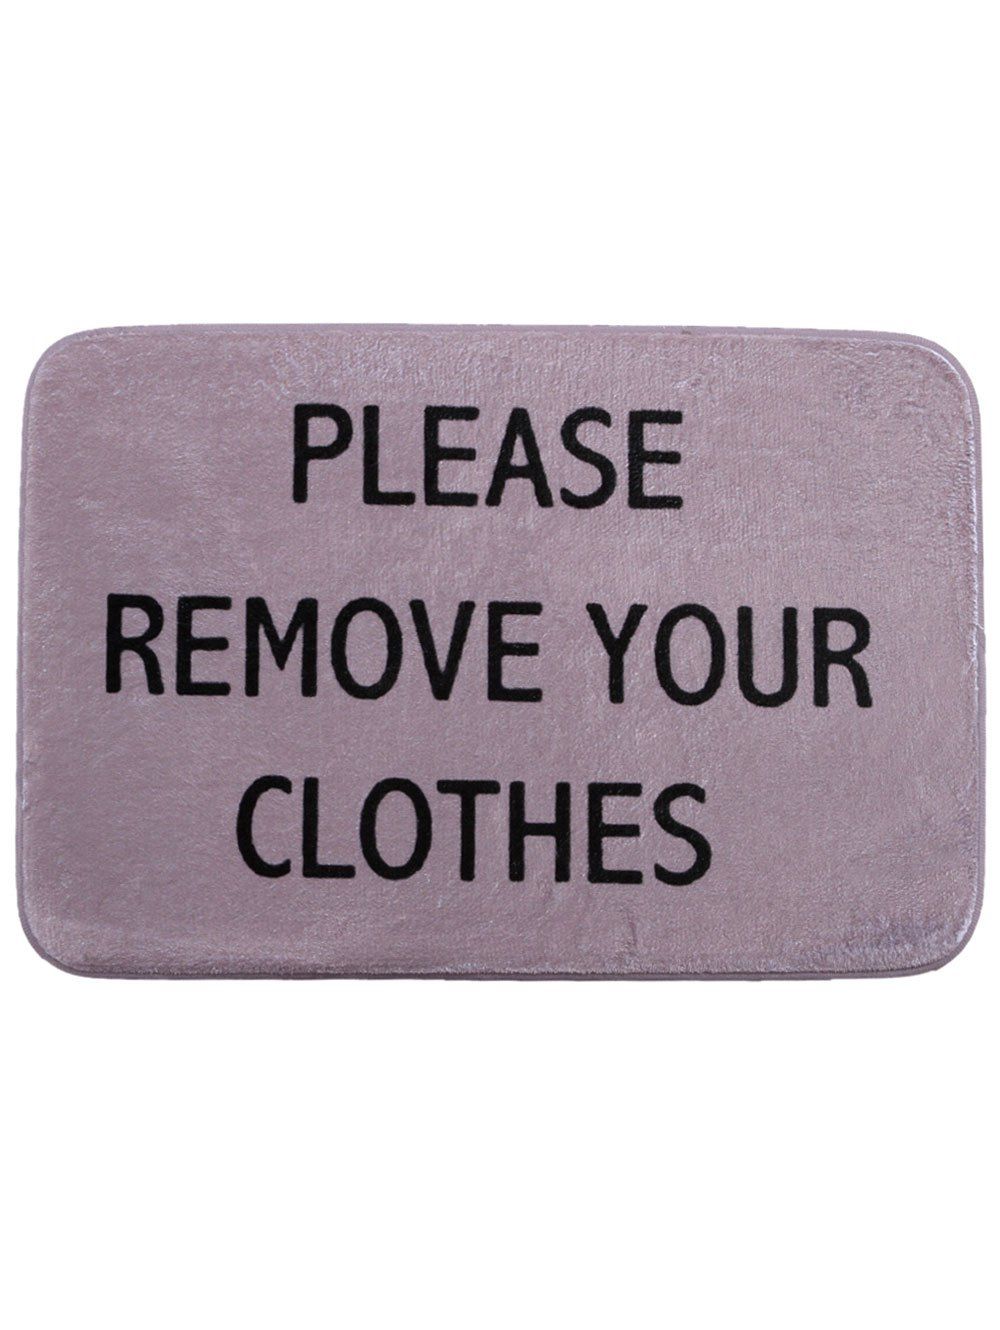 Please купить. Remove your clothes. Please remove your. Купи плиз. Buy me please.